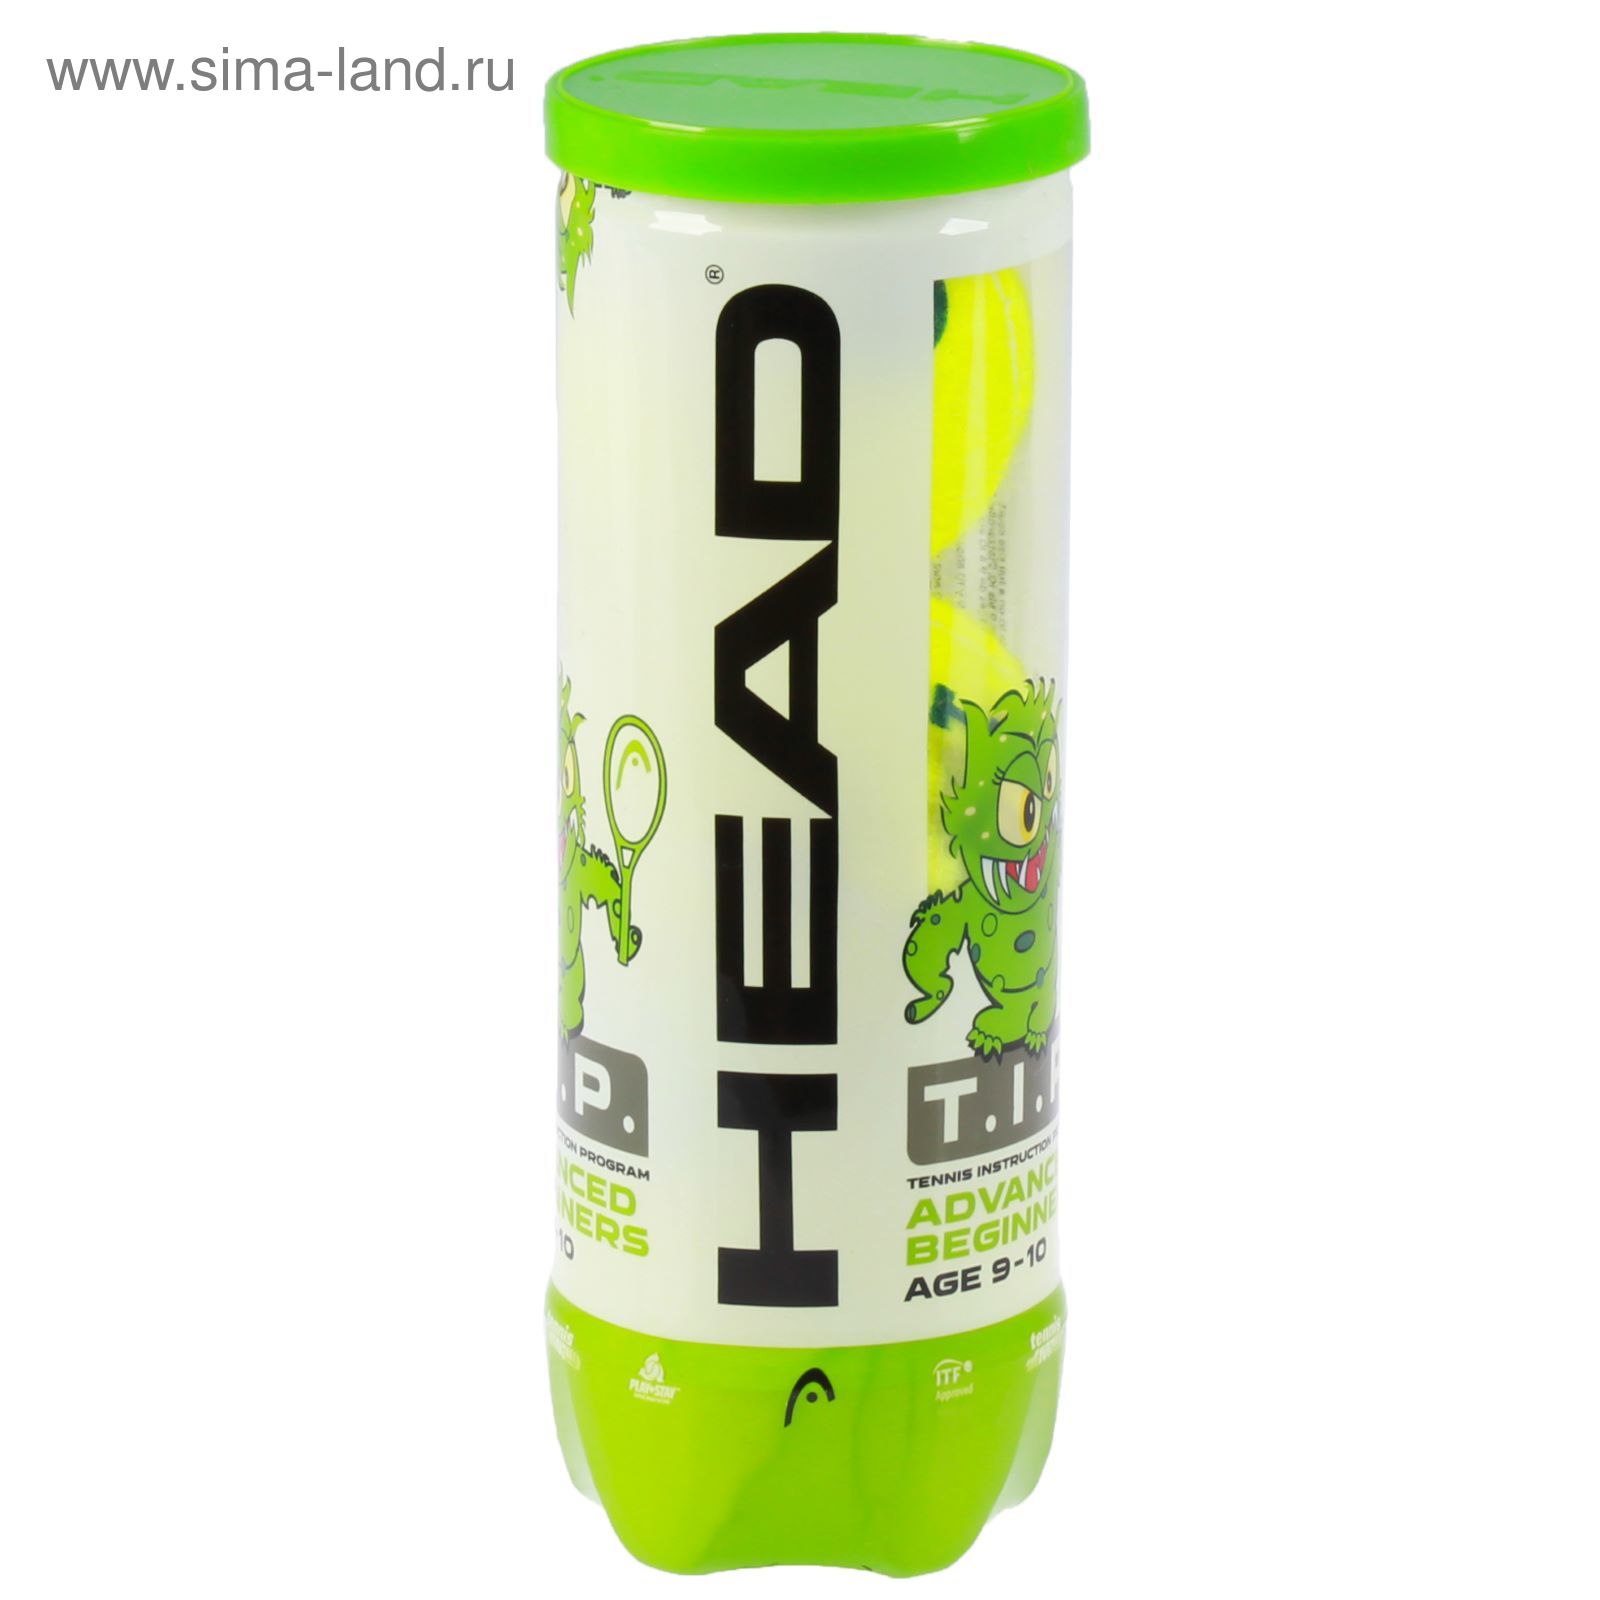 Мяч теннисный Head T.I.P Green, набор 3 штуки, фетр, натуральная резина